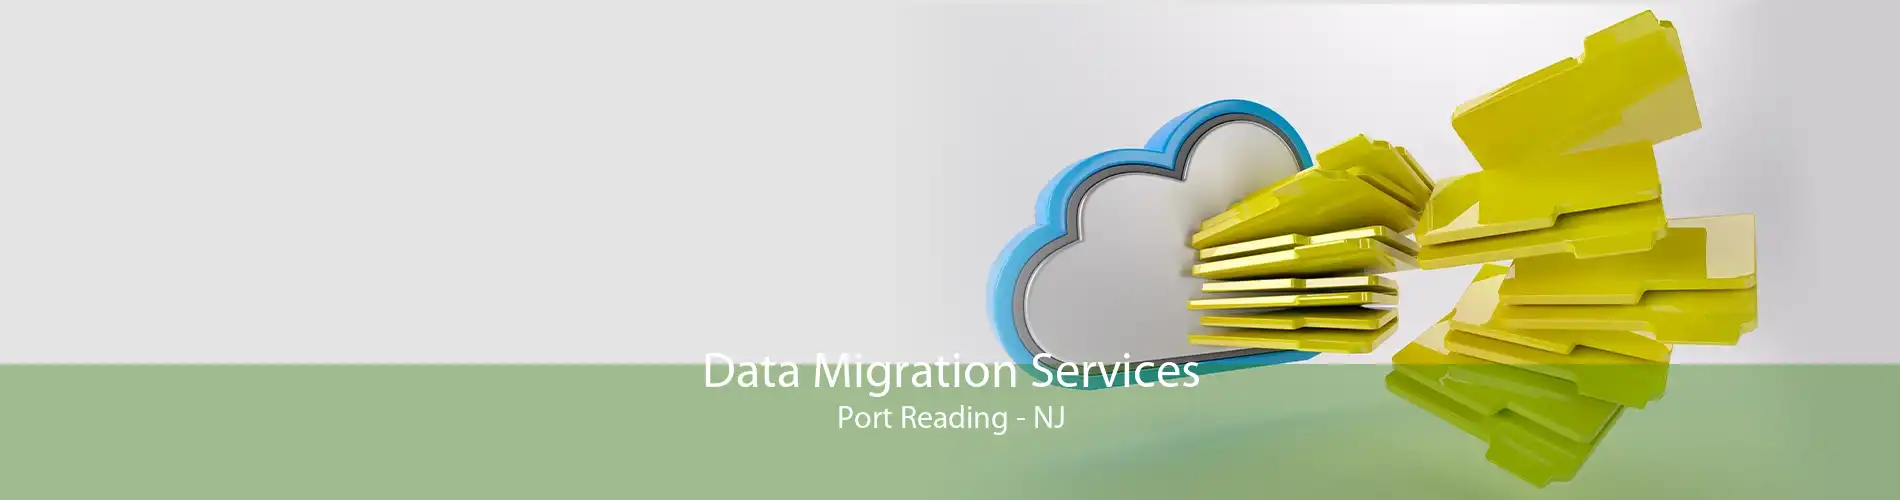 Data Migration Services Port Reading - NJ